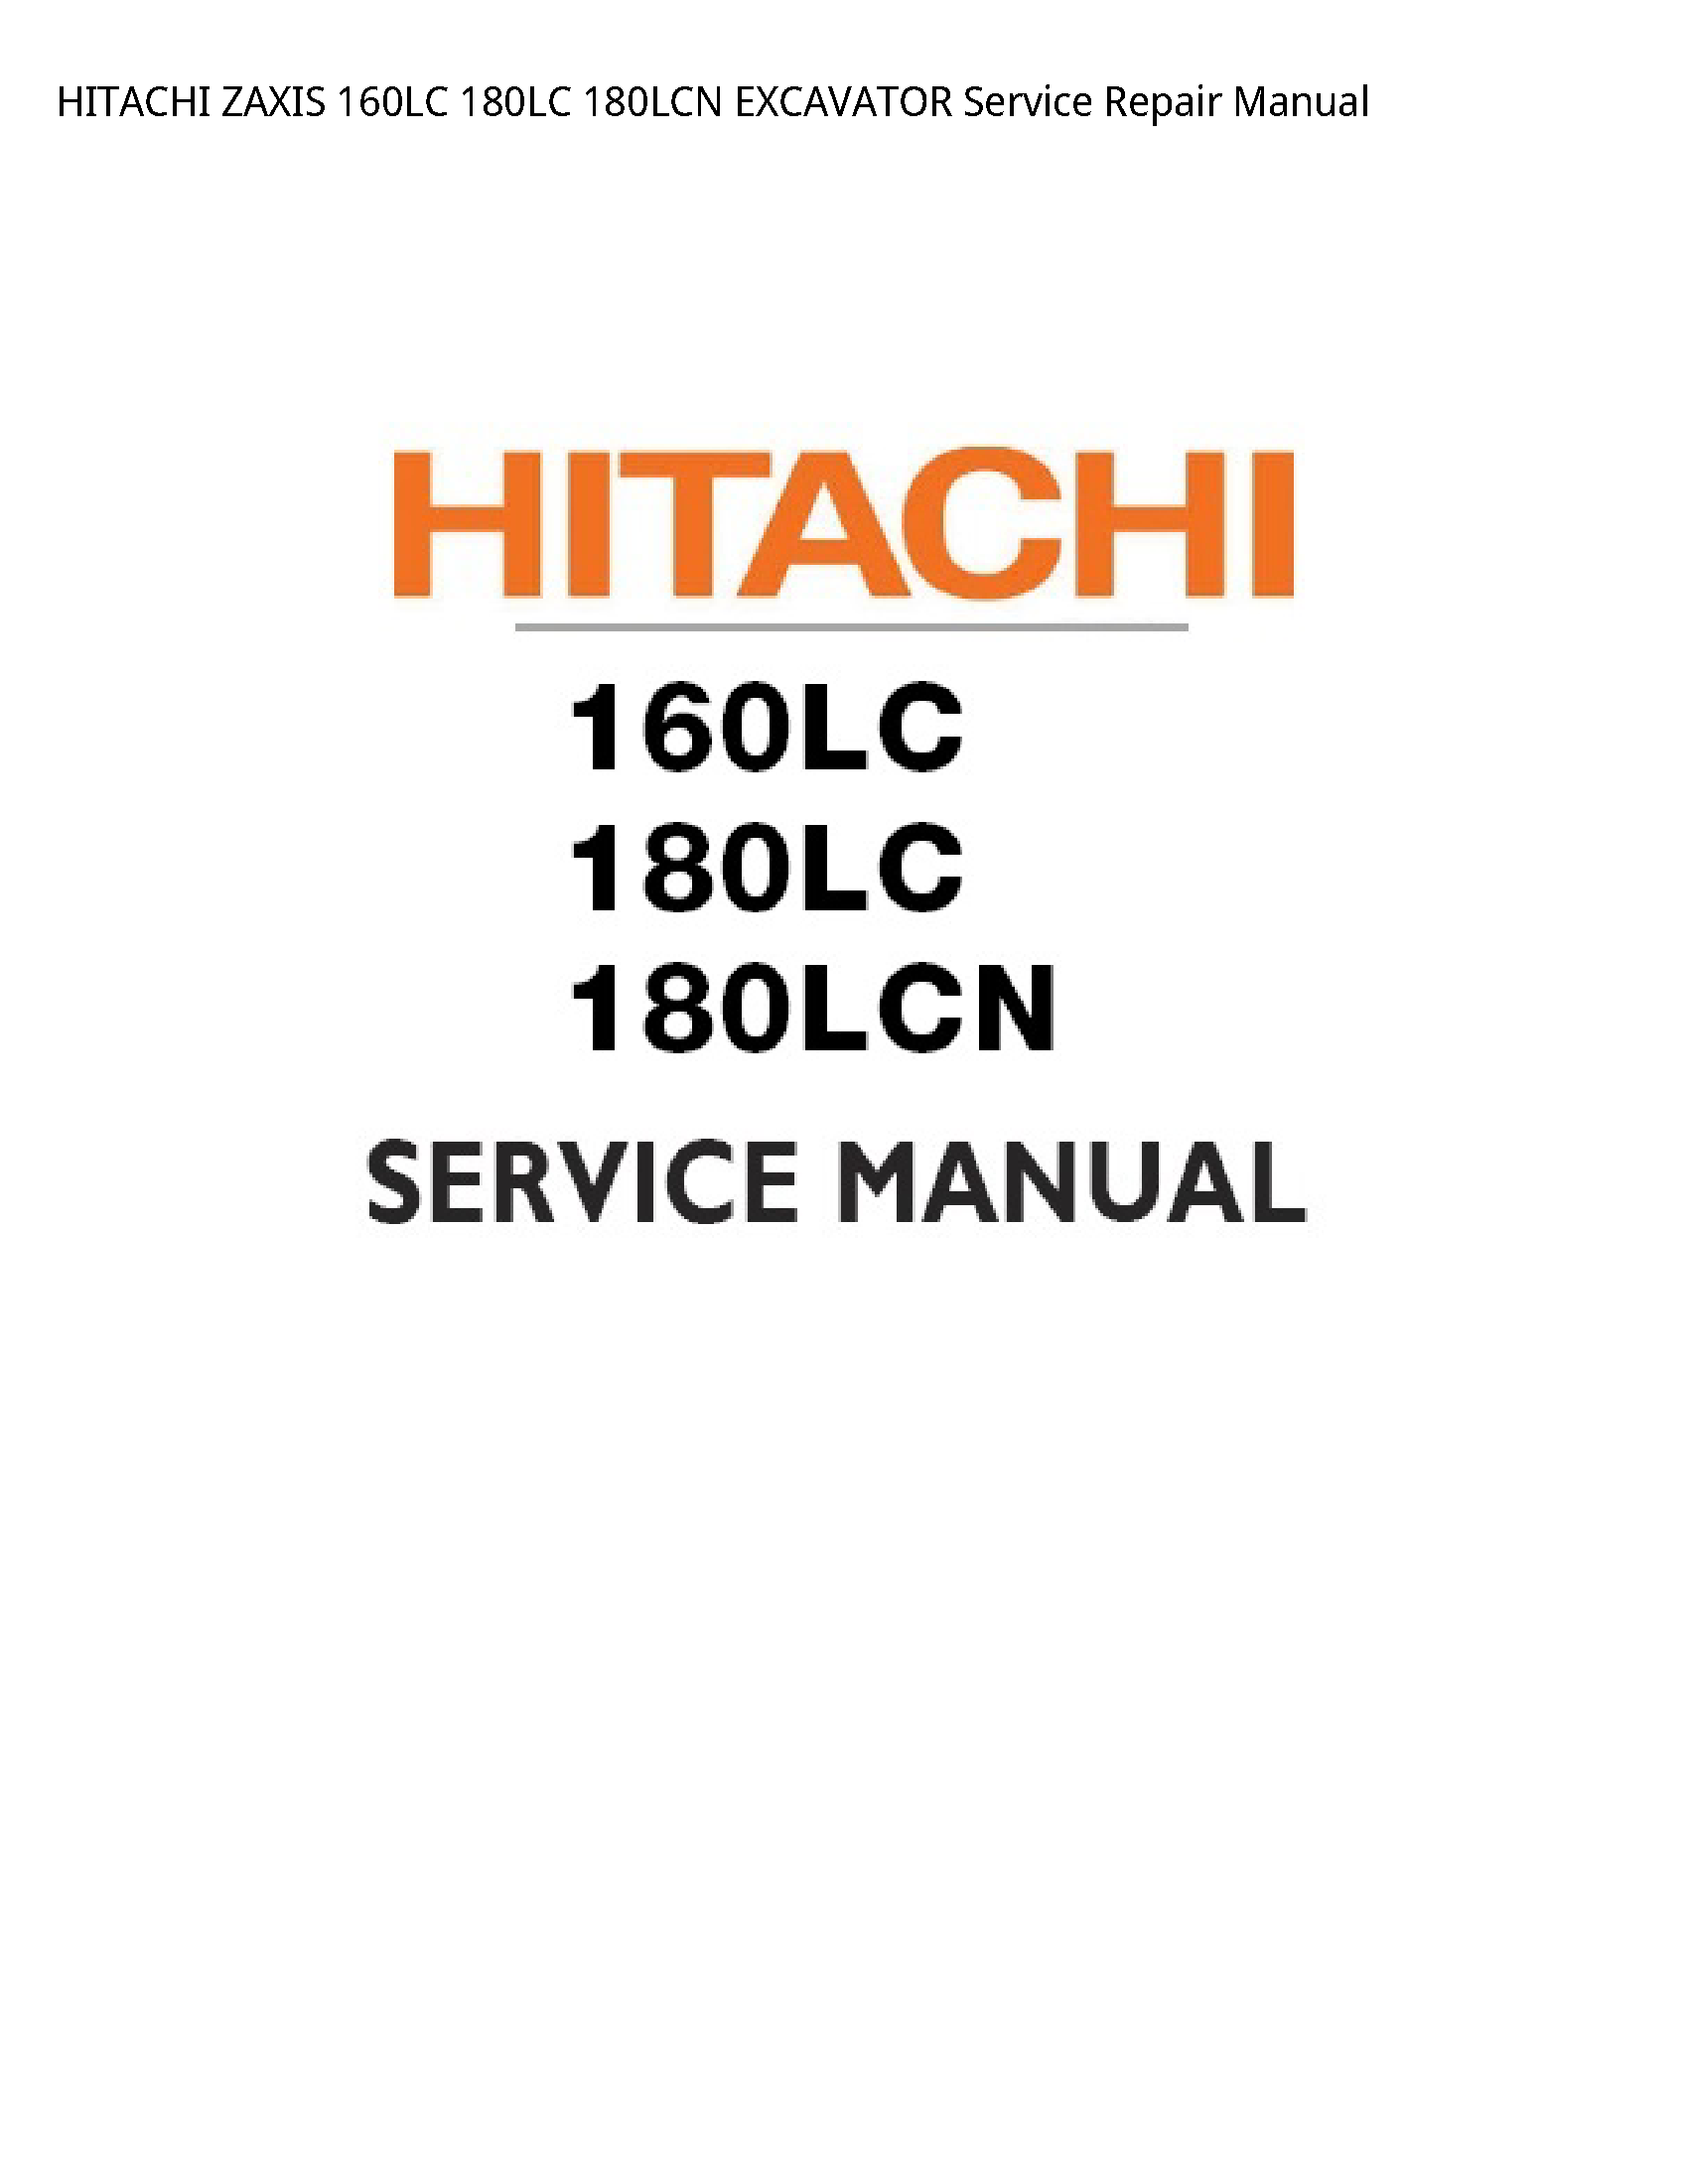 Hitachi 160LC ZAXIS EXCAVATOR manual